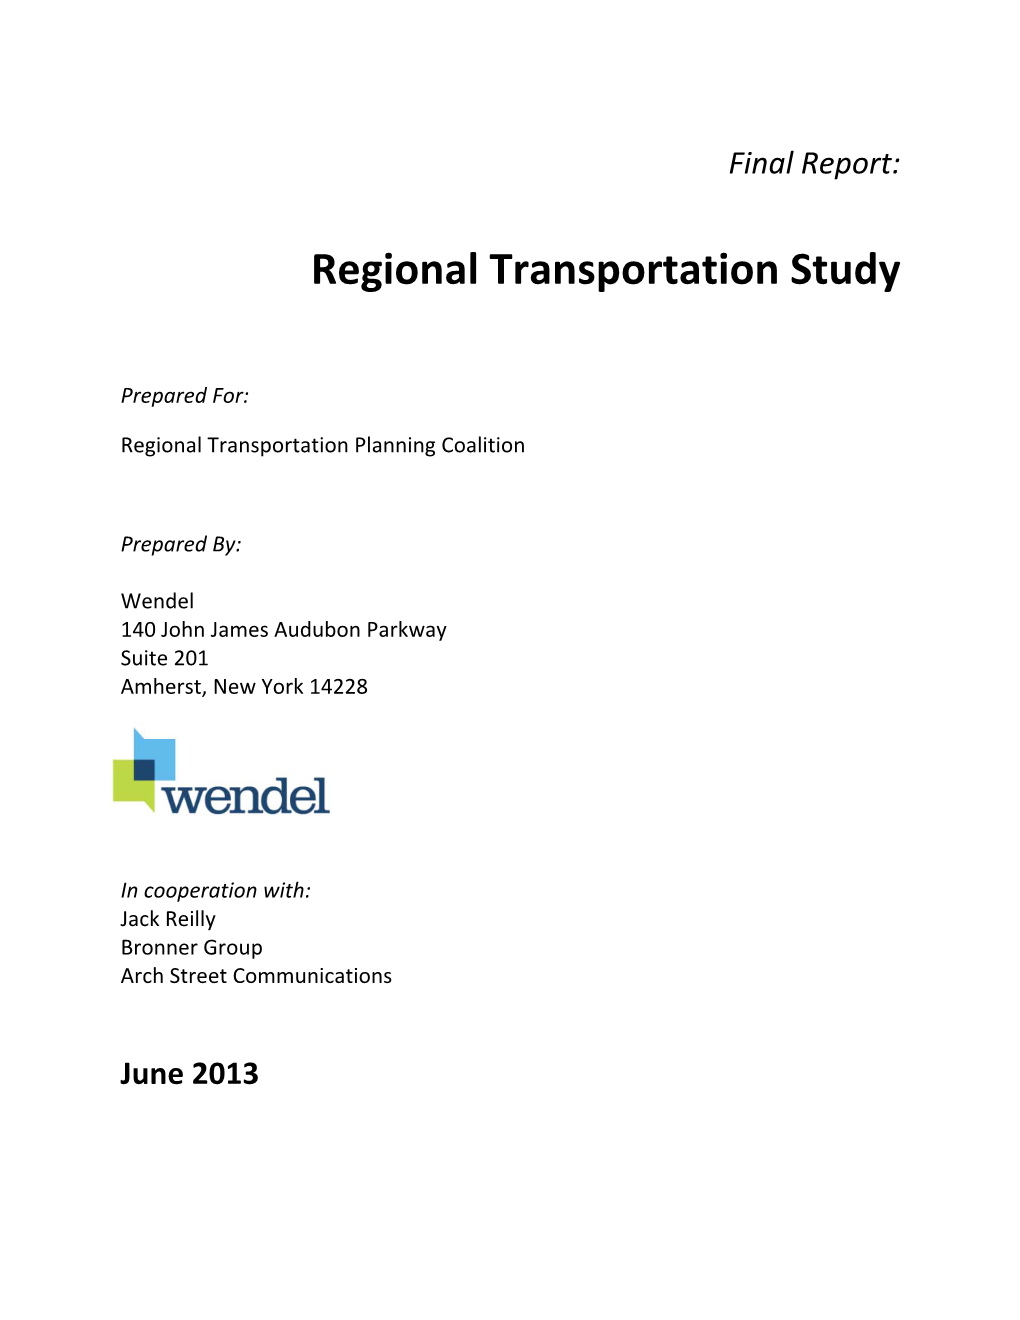 Final Report: Regional Transportation Study